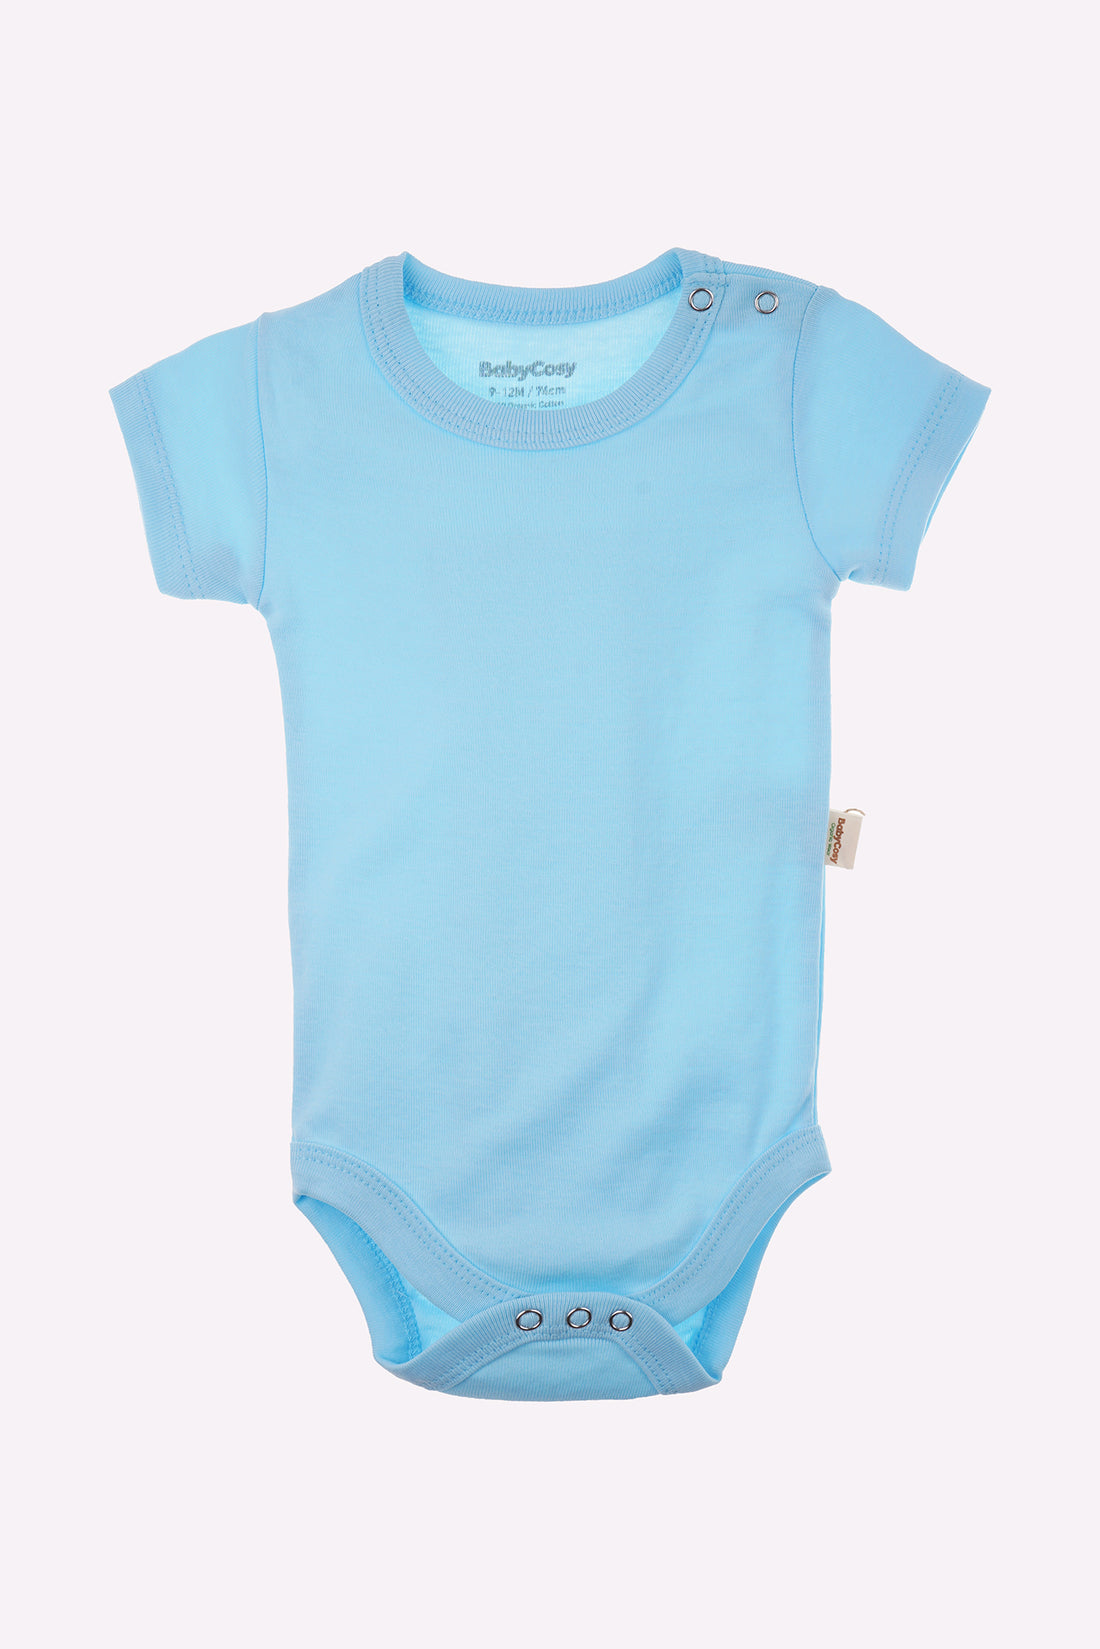 Babycosy Organic Short Sleeved Body (Sky Blue)